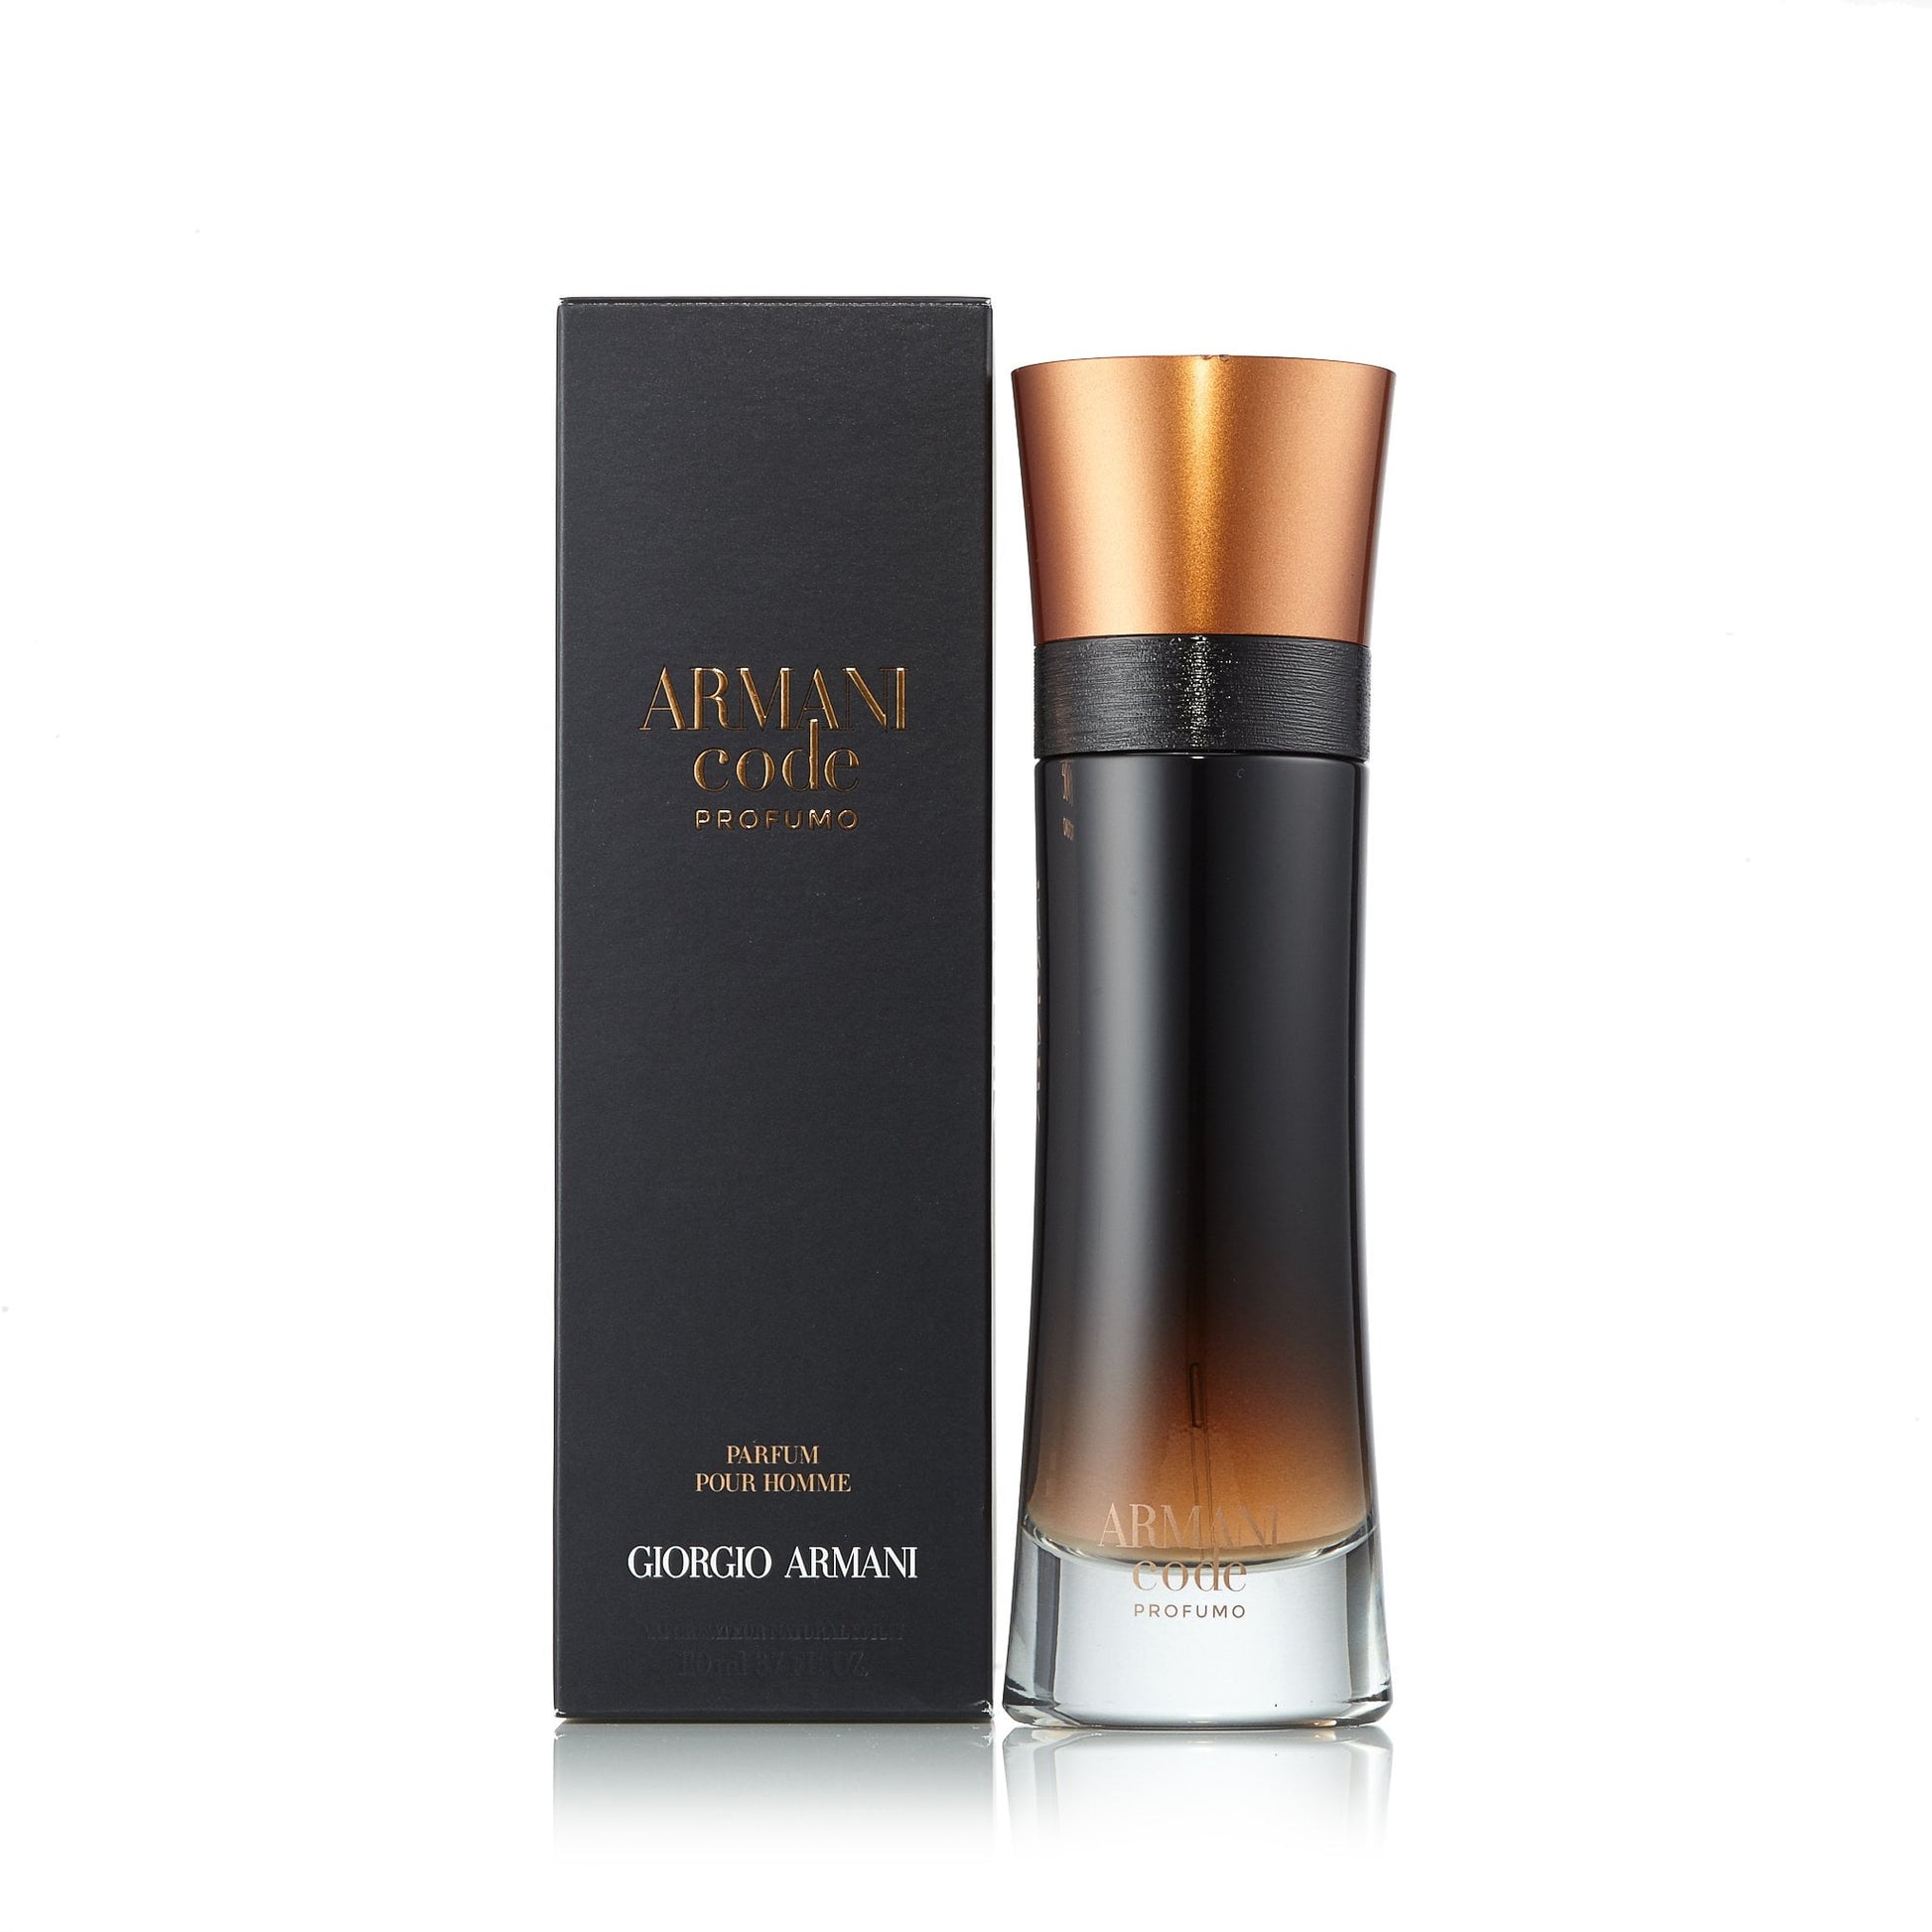 Armani Code Profumo Parfum Spray for Men by Giorgio Armani, Product image 3